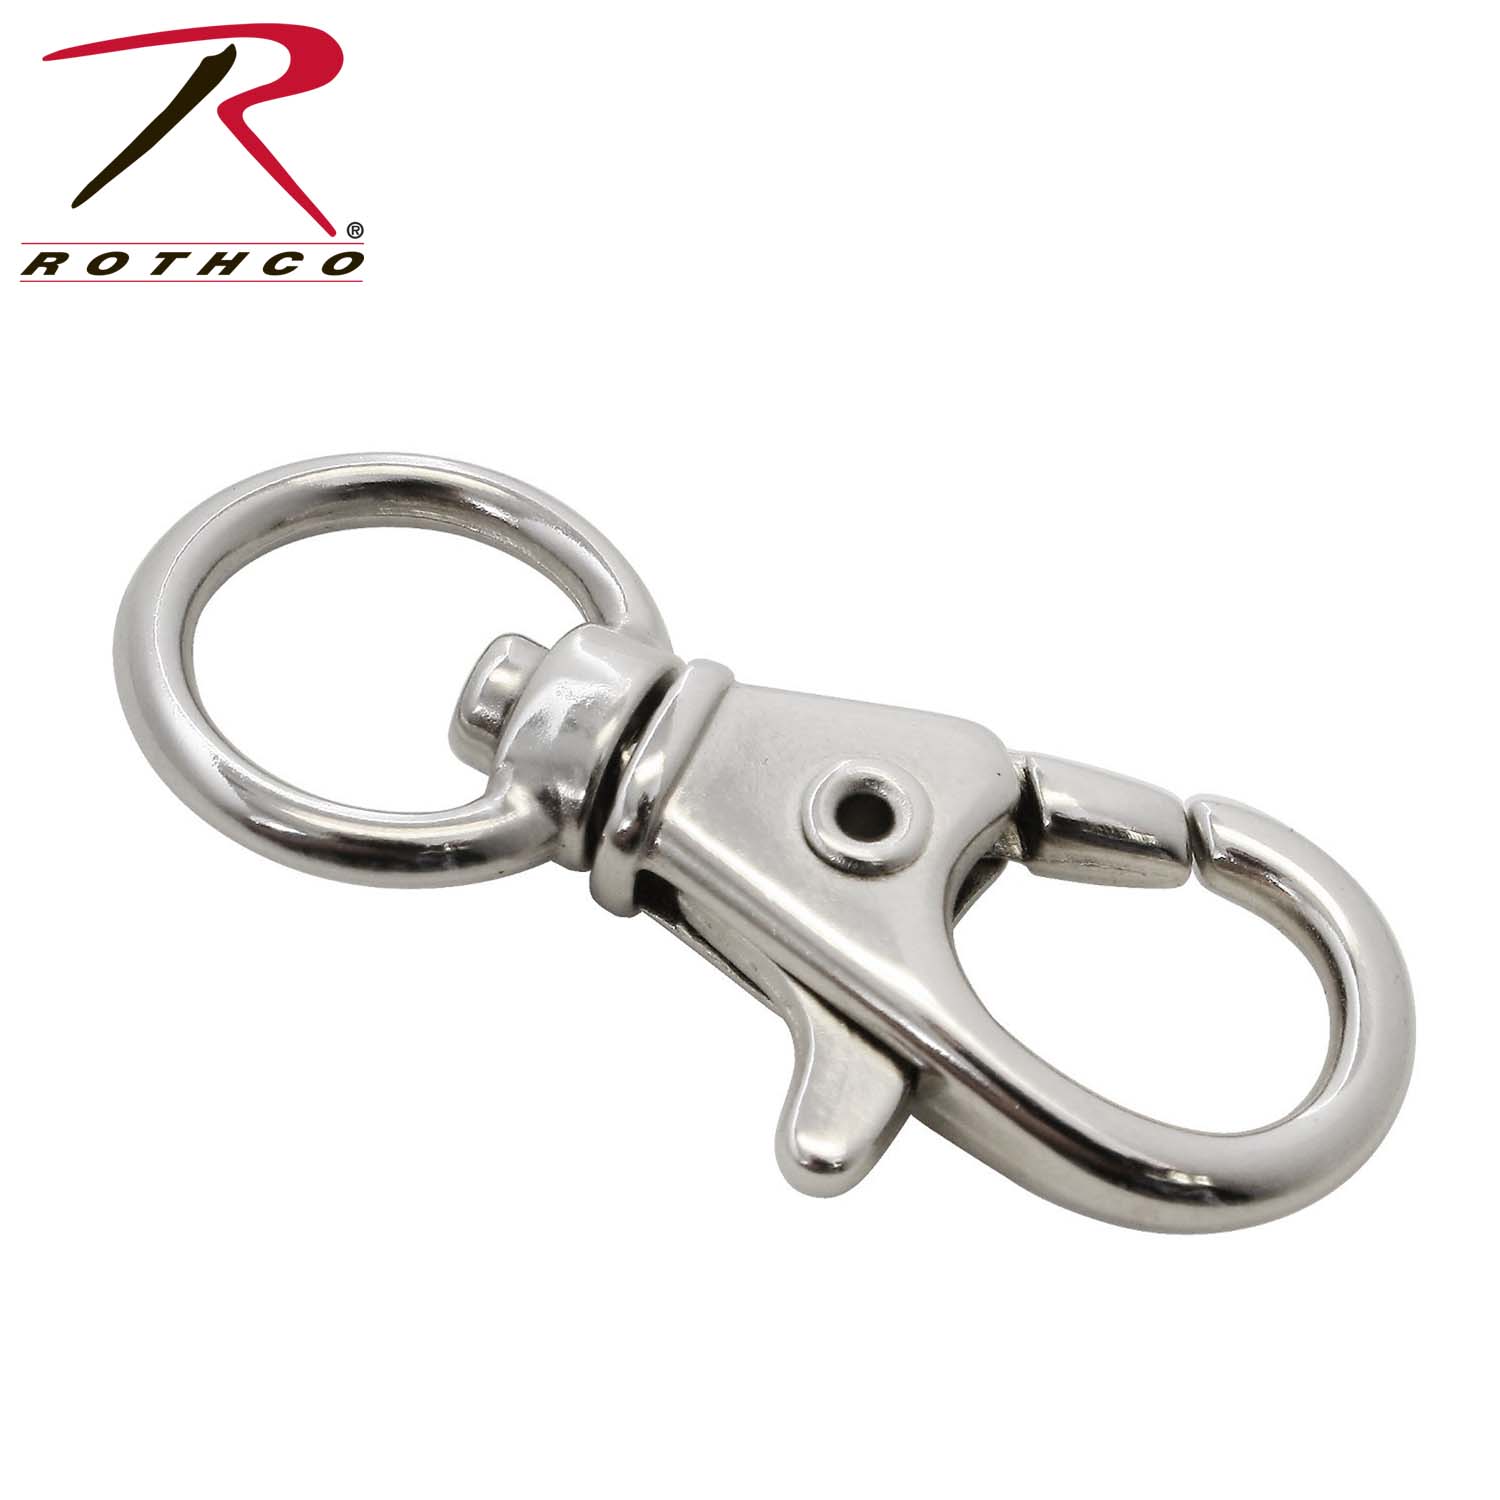 Rothco 1/2 Swivel Trigger Snap Hook / Nickel - 10 Pack